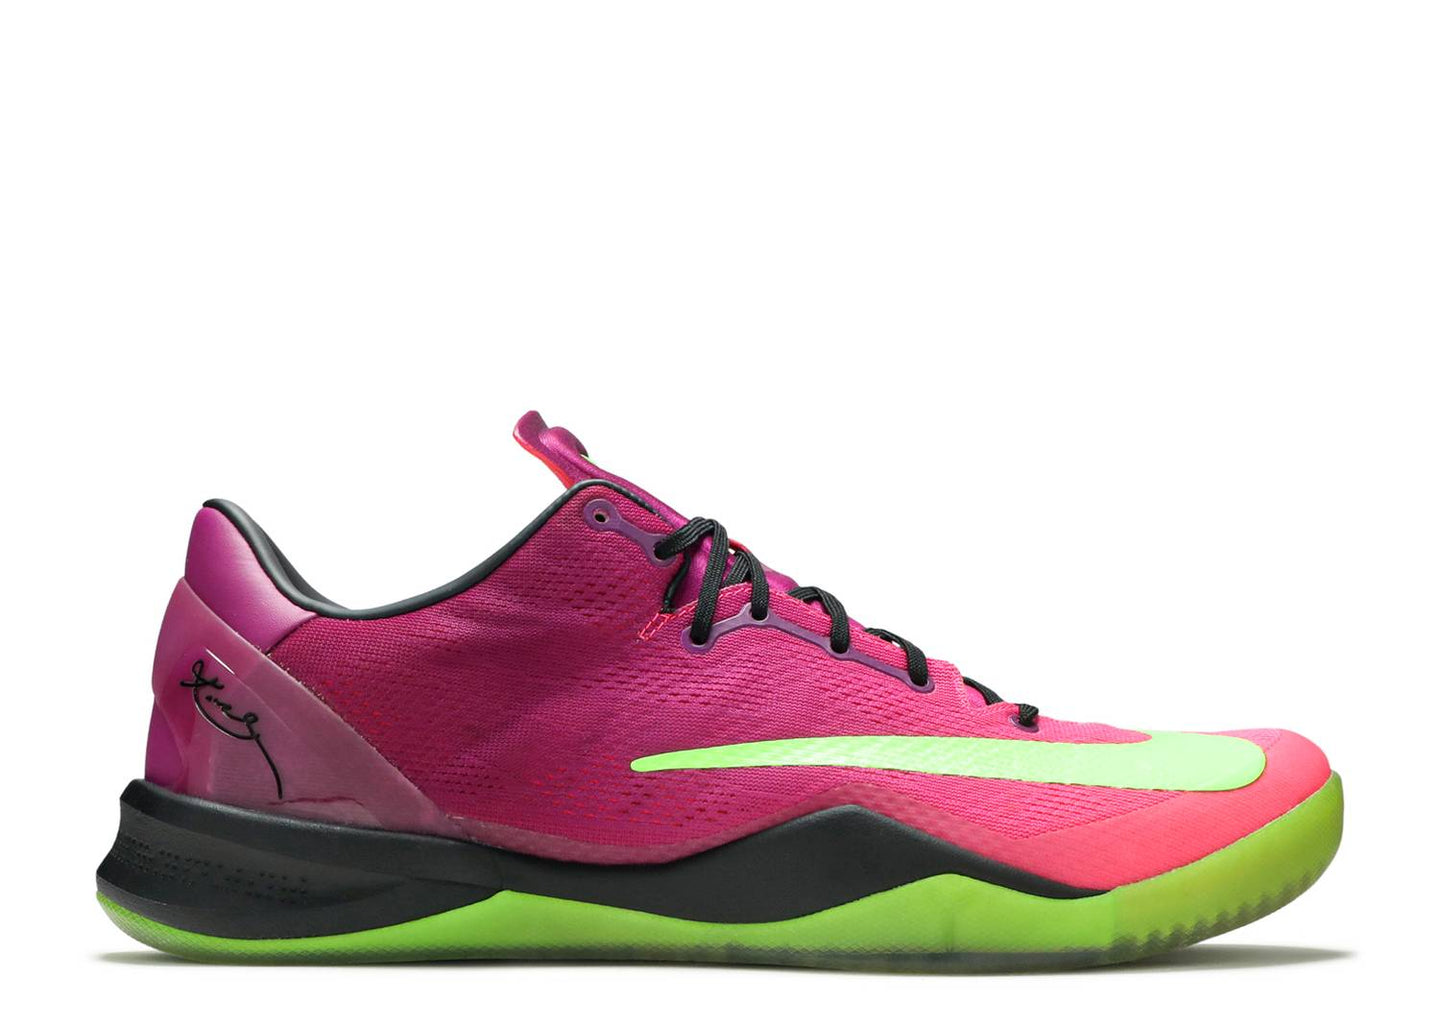 Nike Kobe 8 - Mambacurial - Used